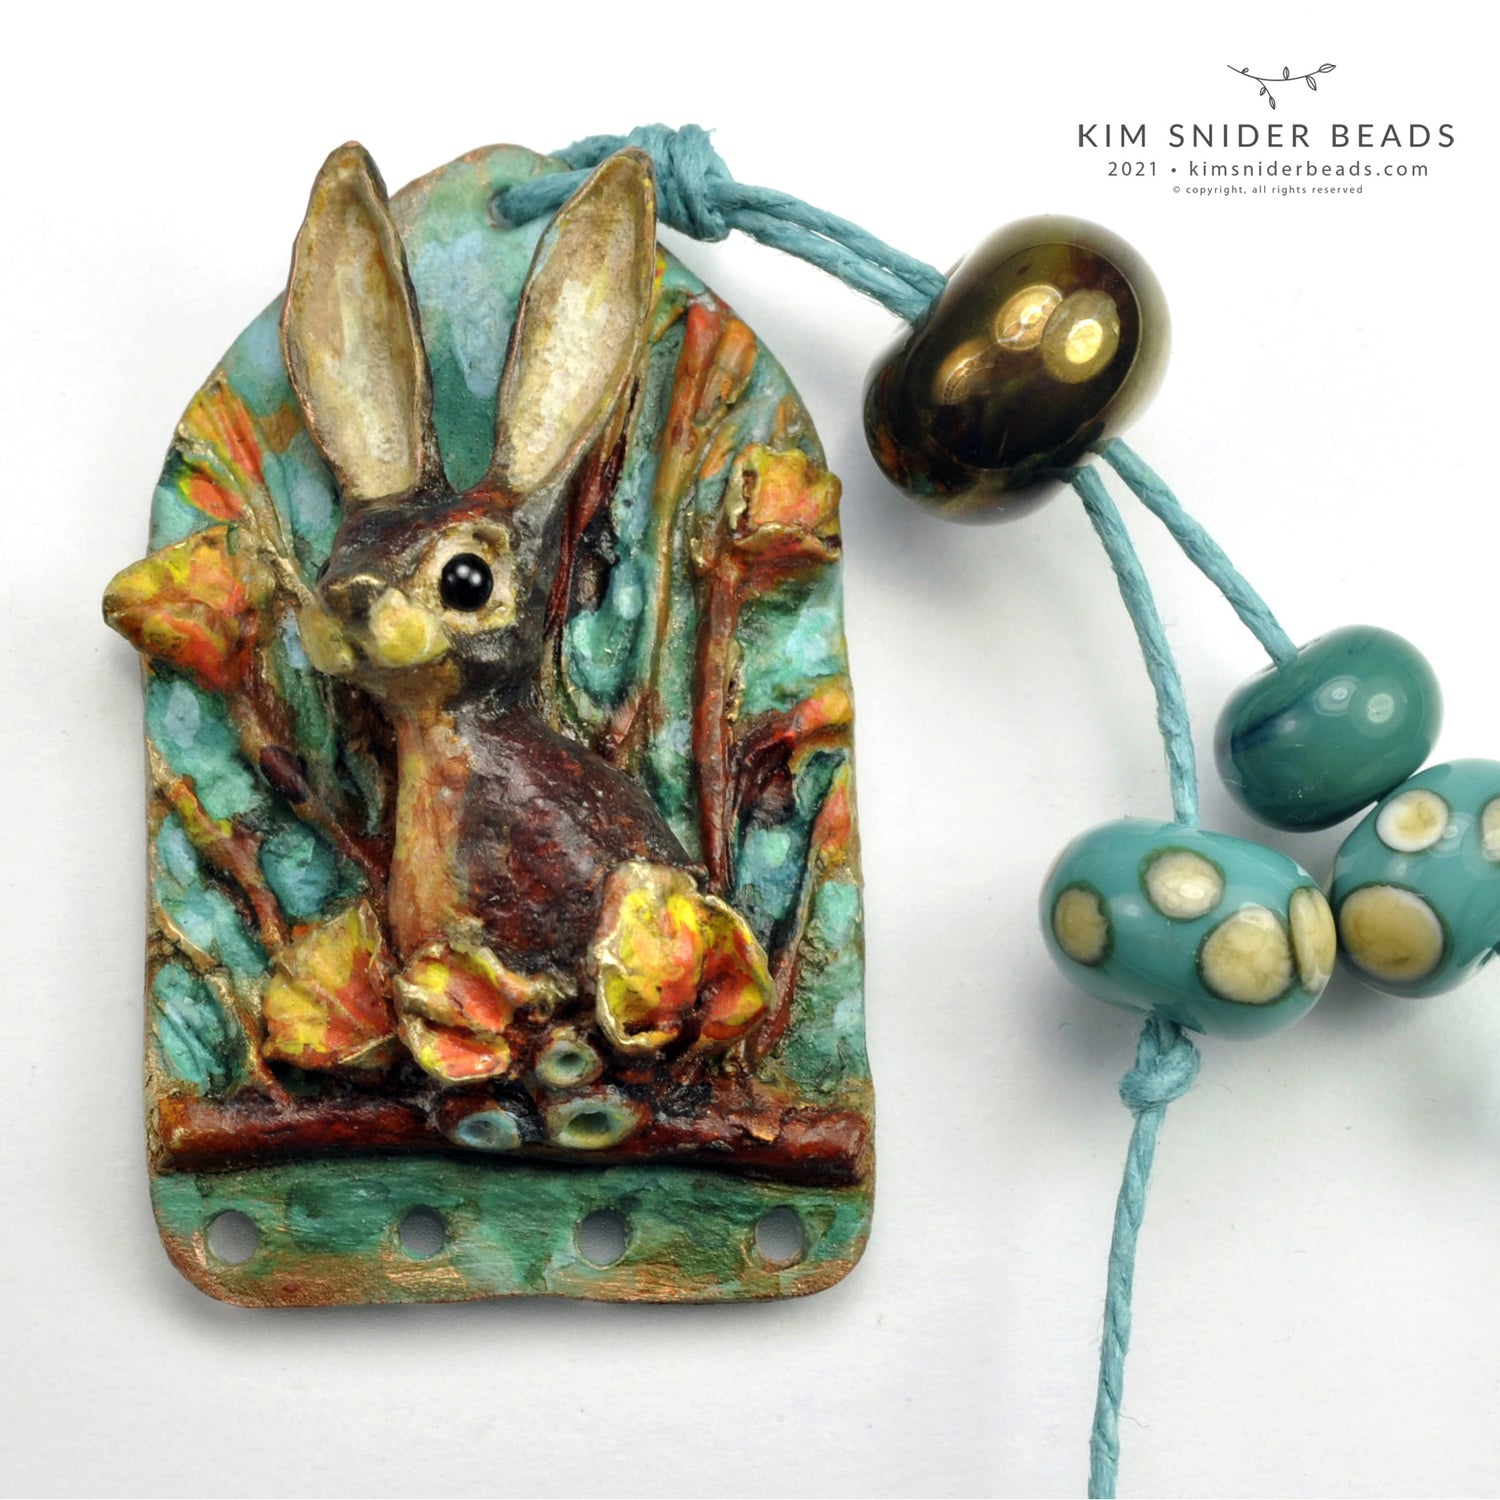 Bunny focal artbead, bronze and glass - copyright Kim Snider